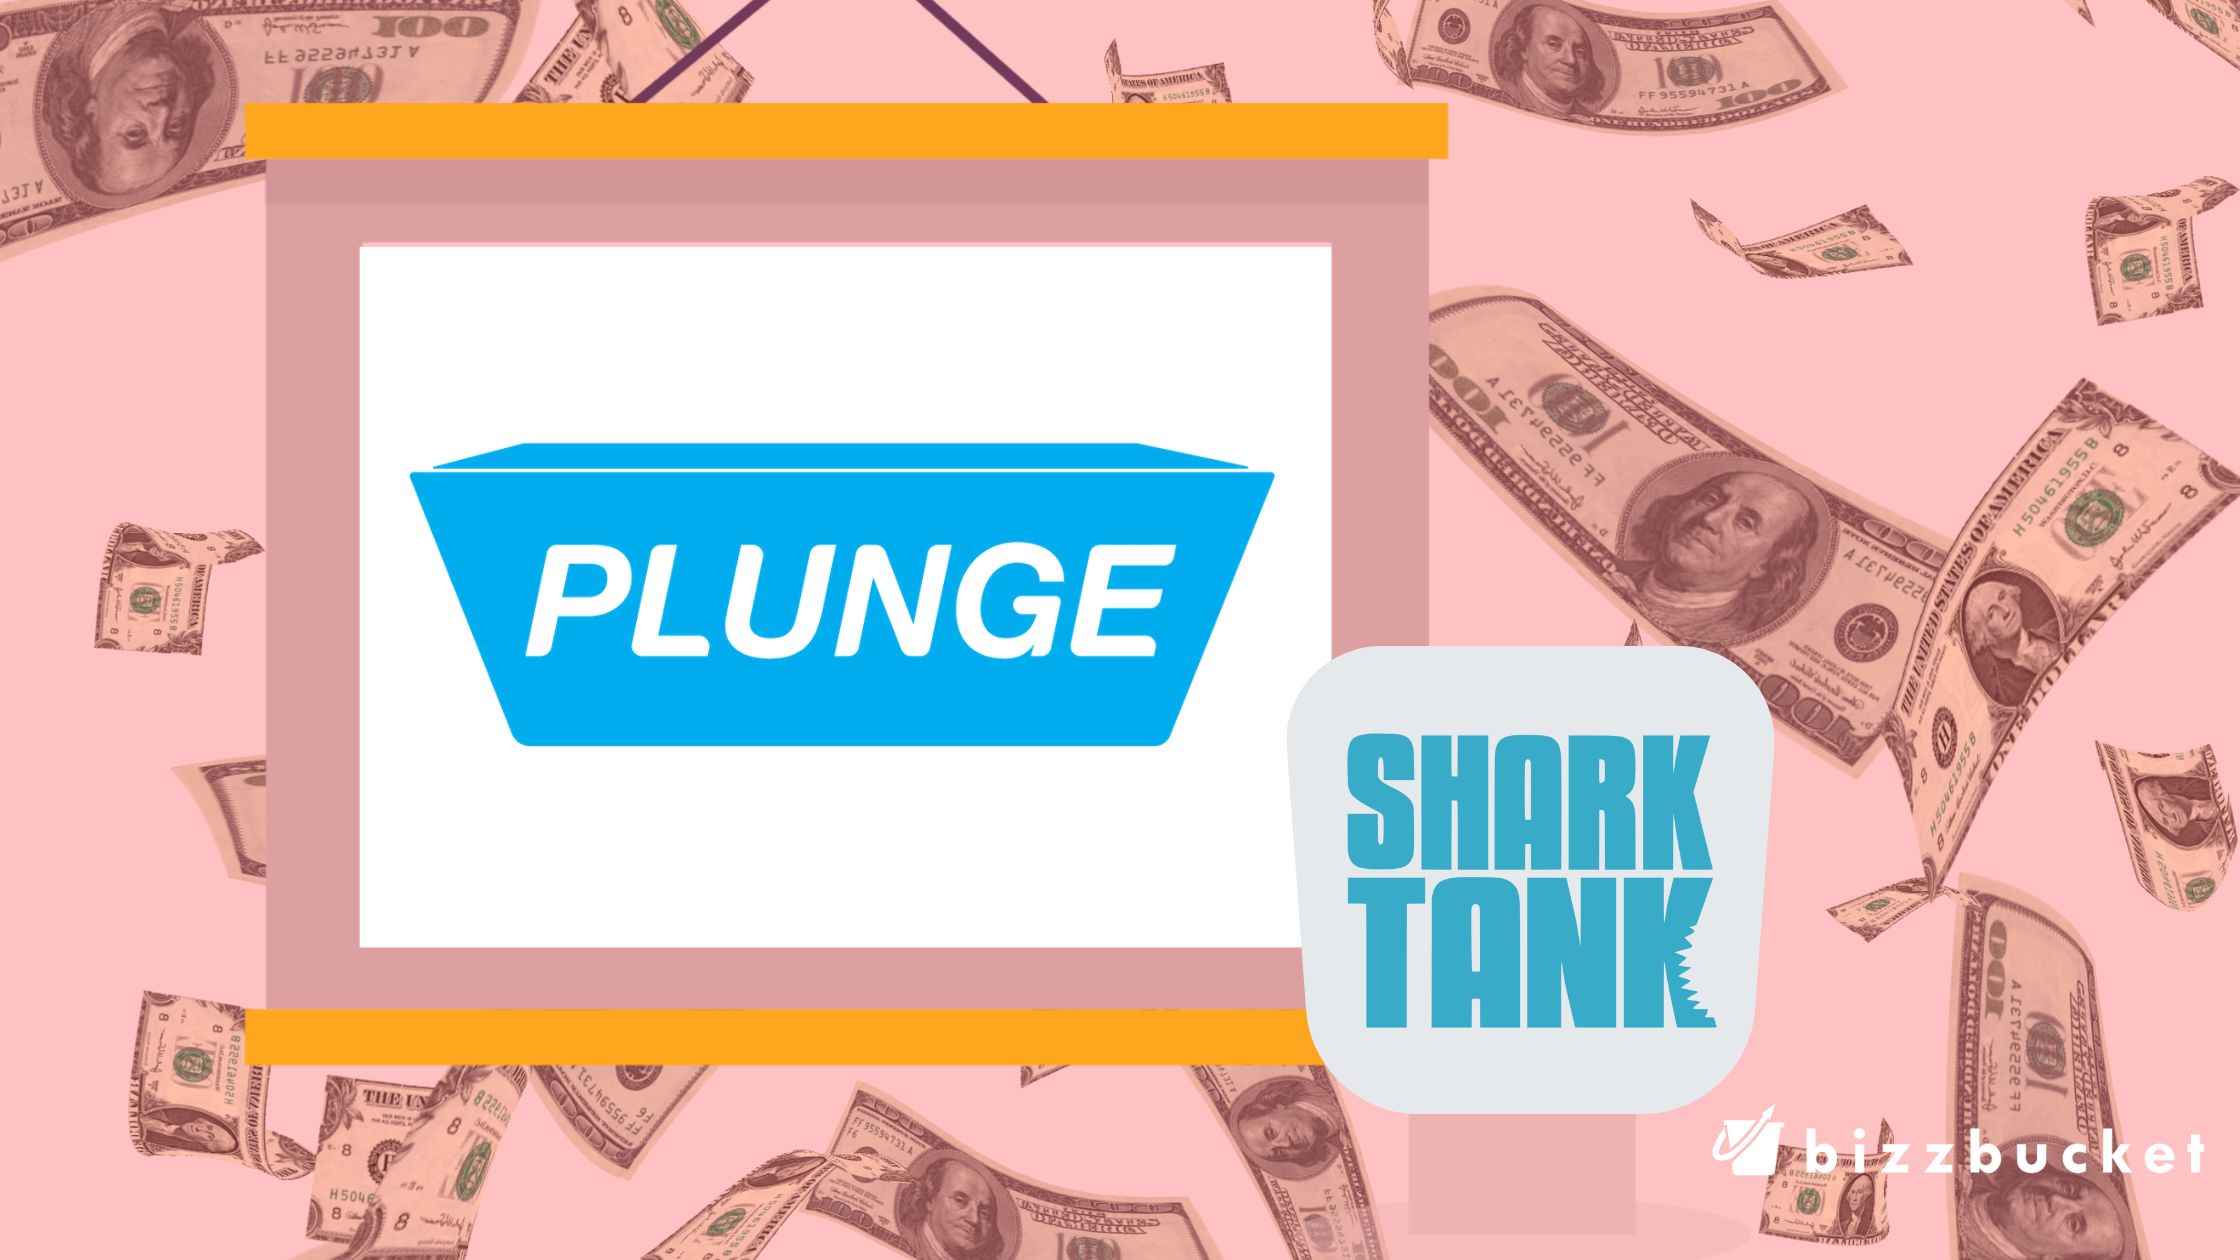 Plunge shark tank update